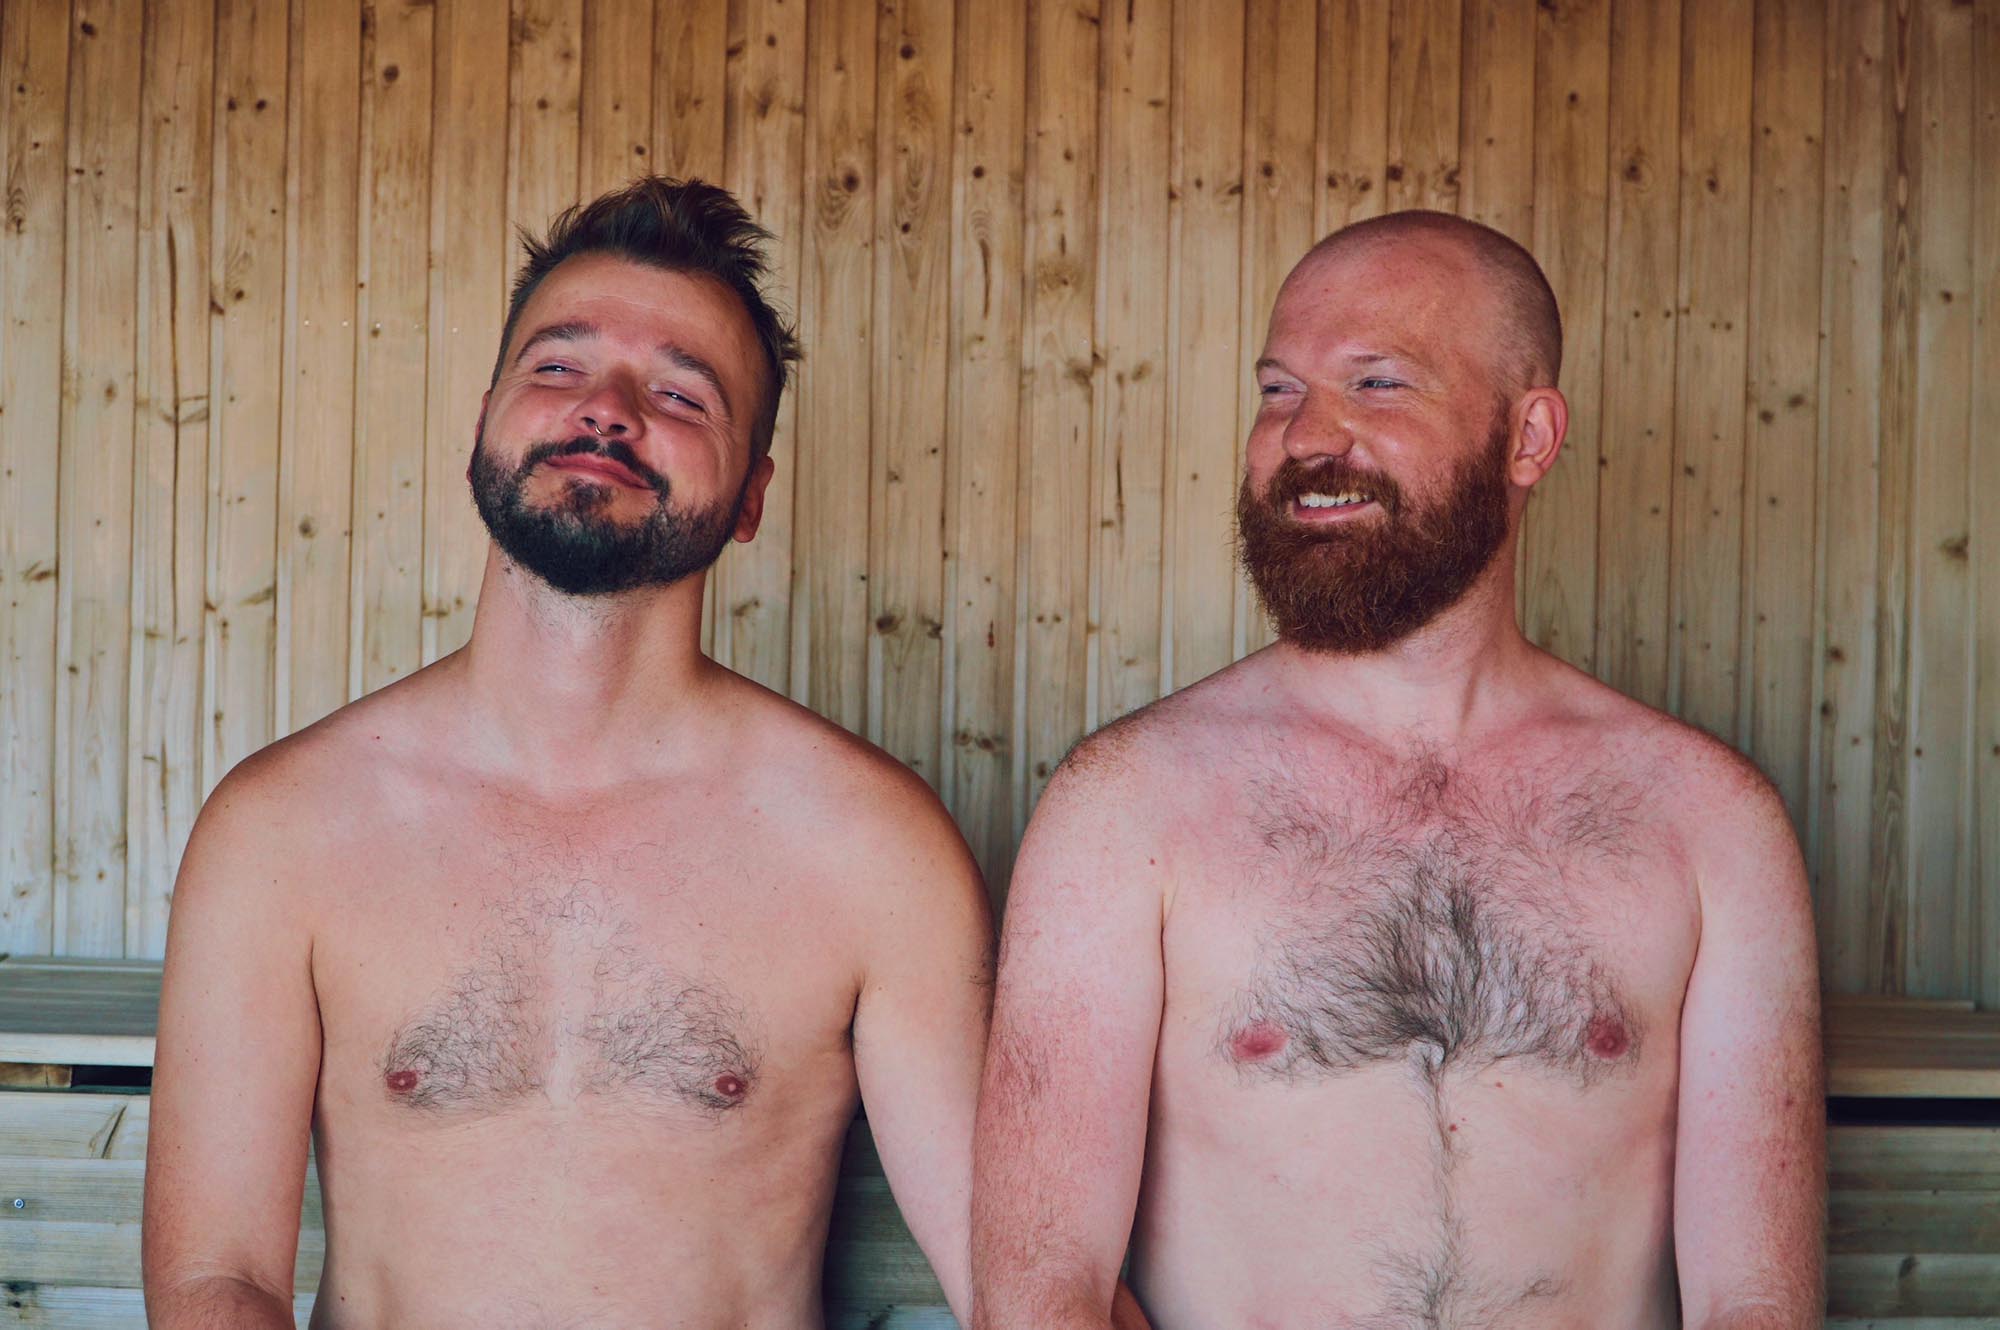 Ribersborgs Kallbadhus: Enjoying a day at Malmö's gay-friendly sauna together © Coupleofmen.com